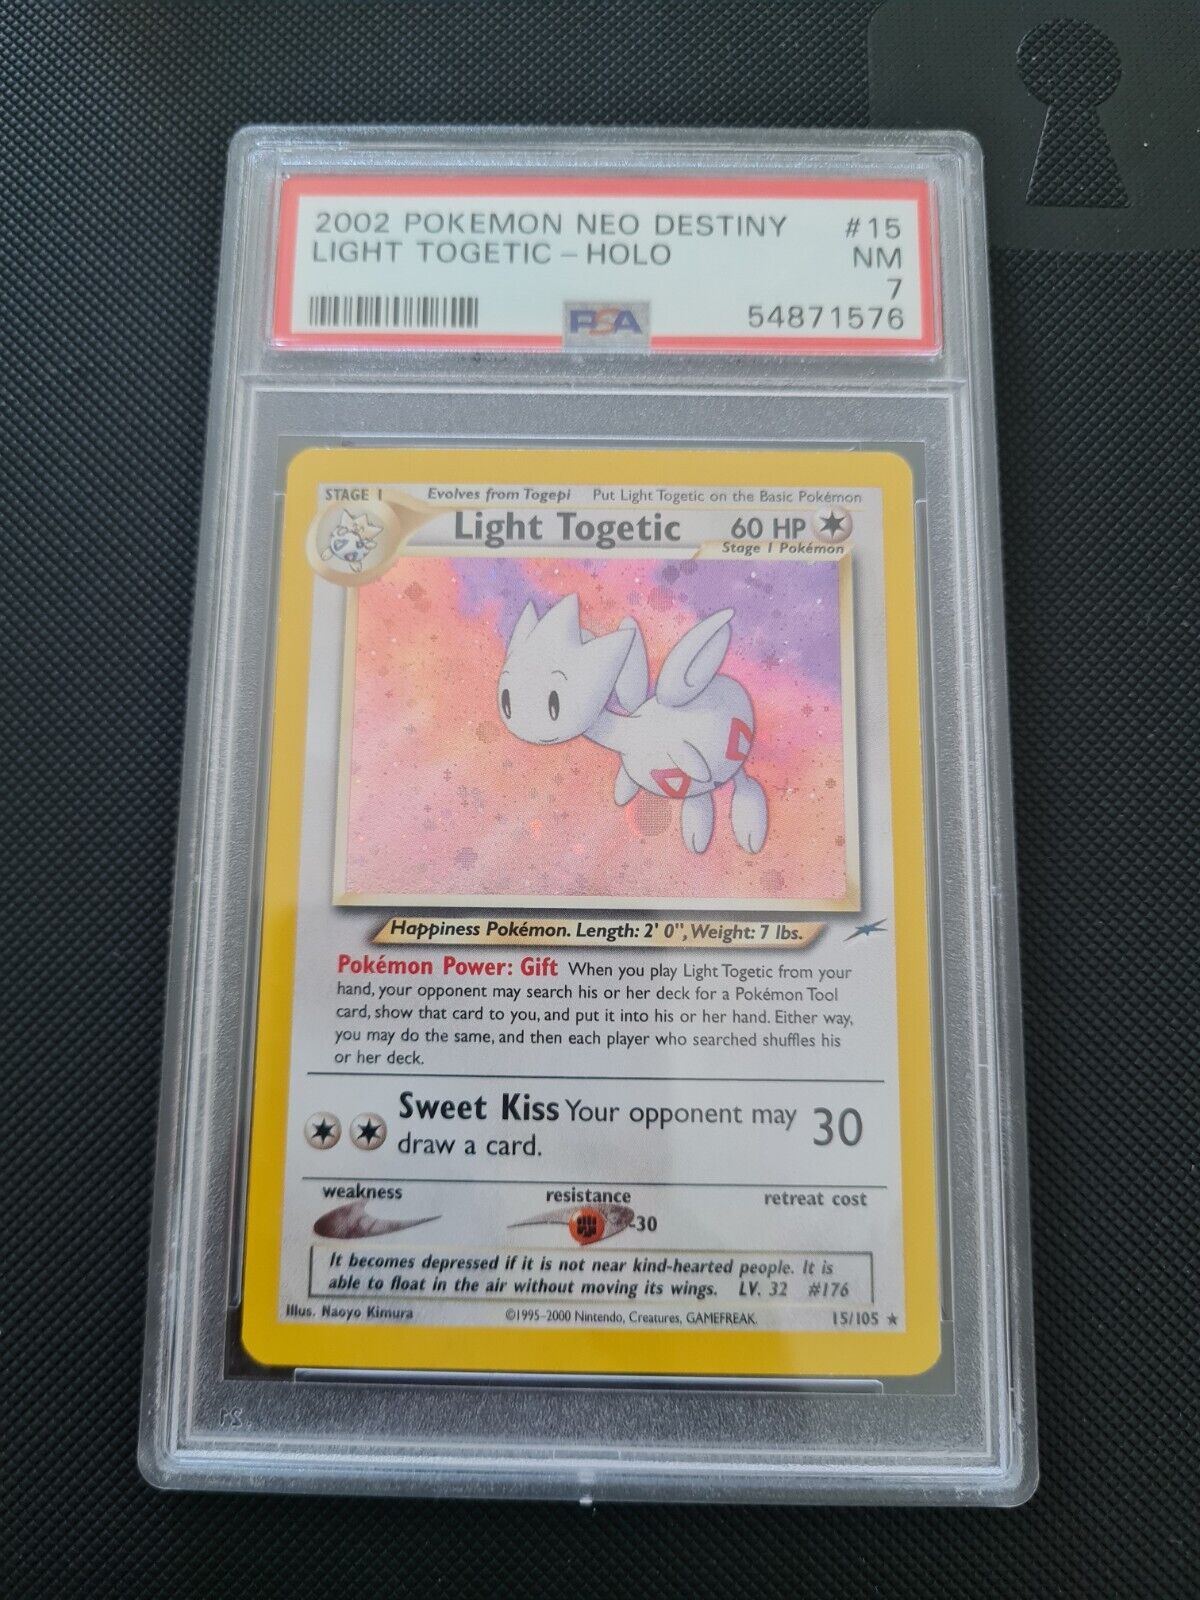 Pokemon Card - Light Togetic Holo Rare Neo Destiny 15/105 WOTC - PSA 7